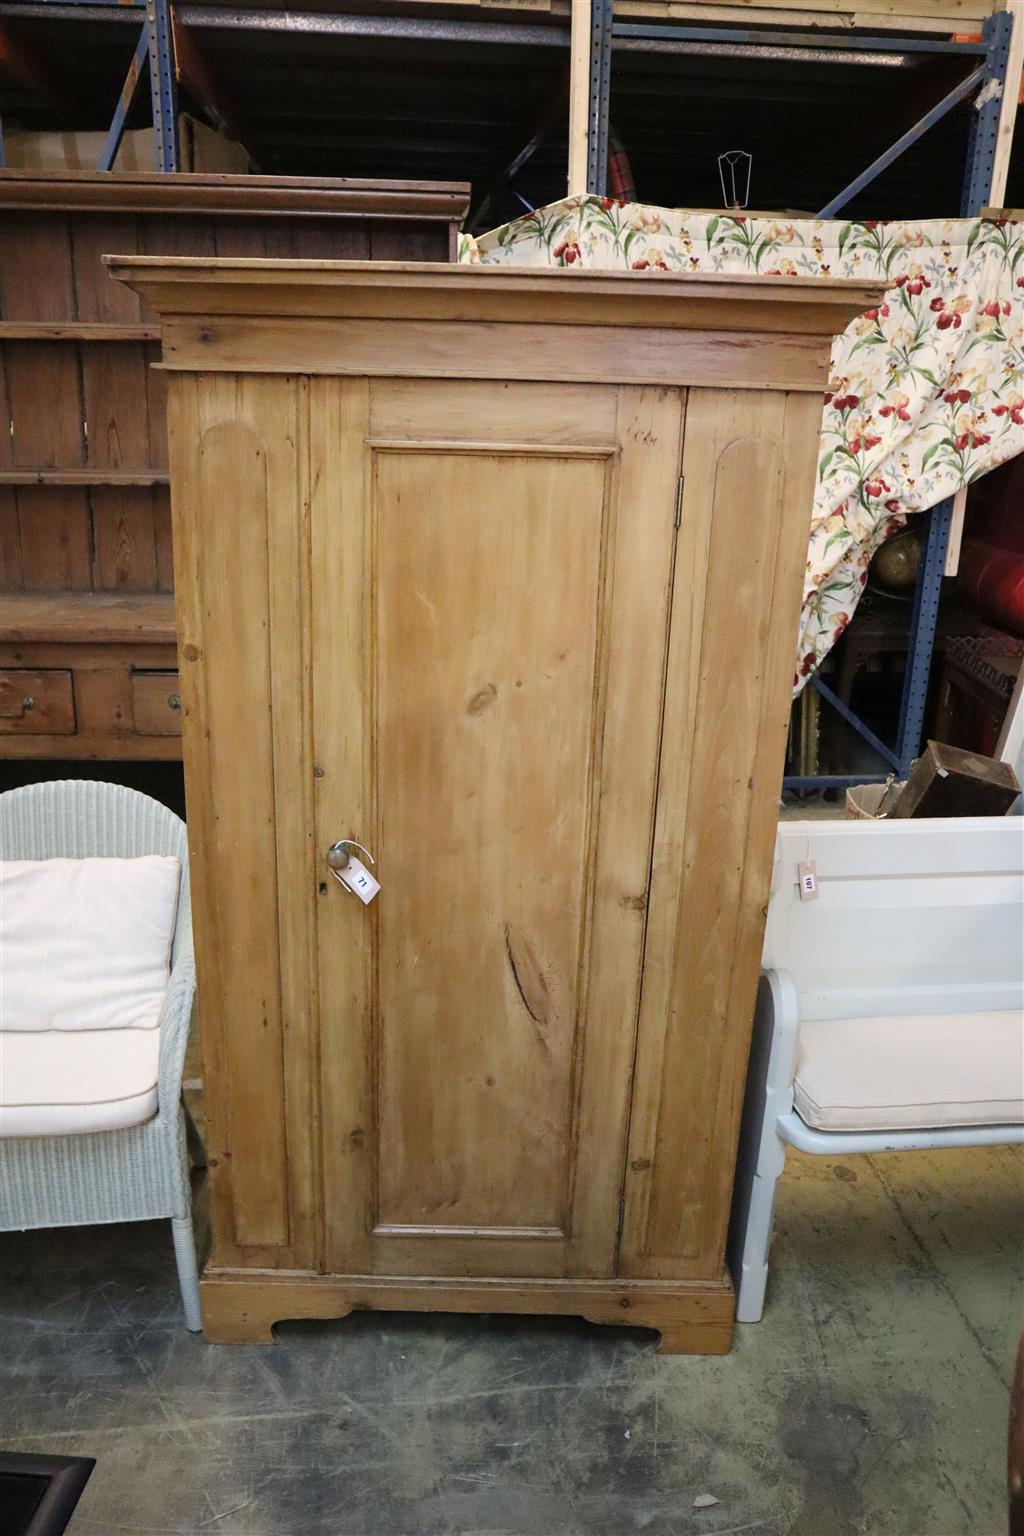 A small Victorian pine wardrobe, width 98cm, depth 50cm, height 172cm